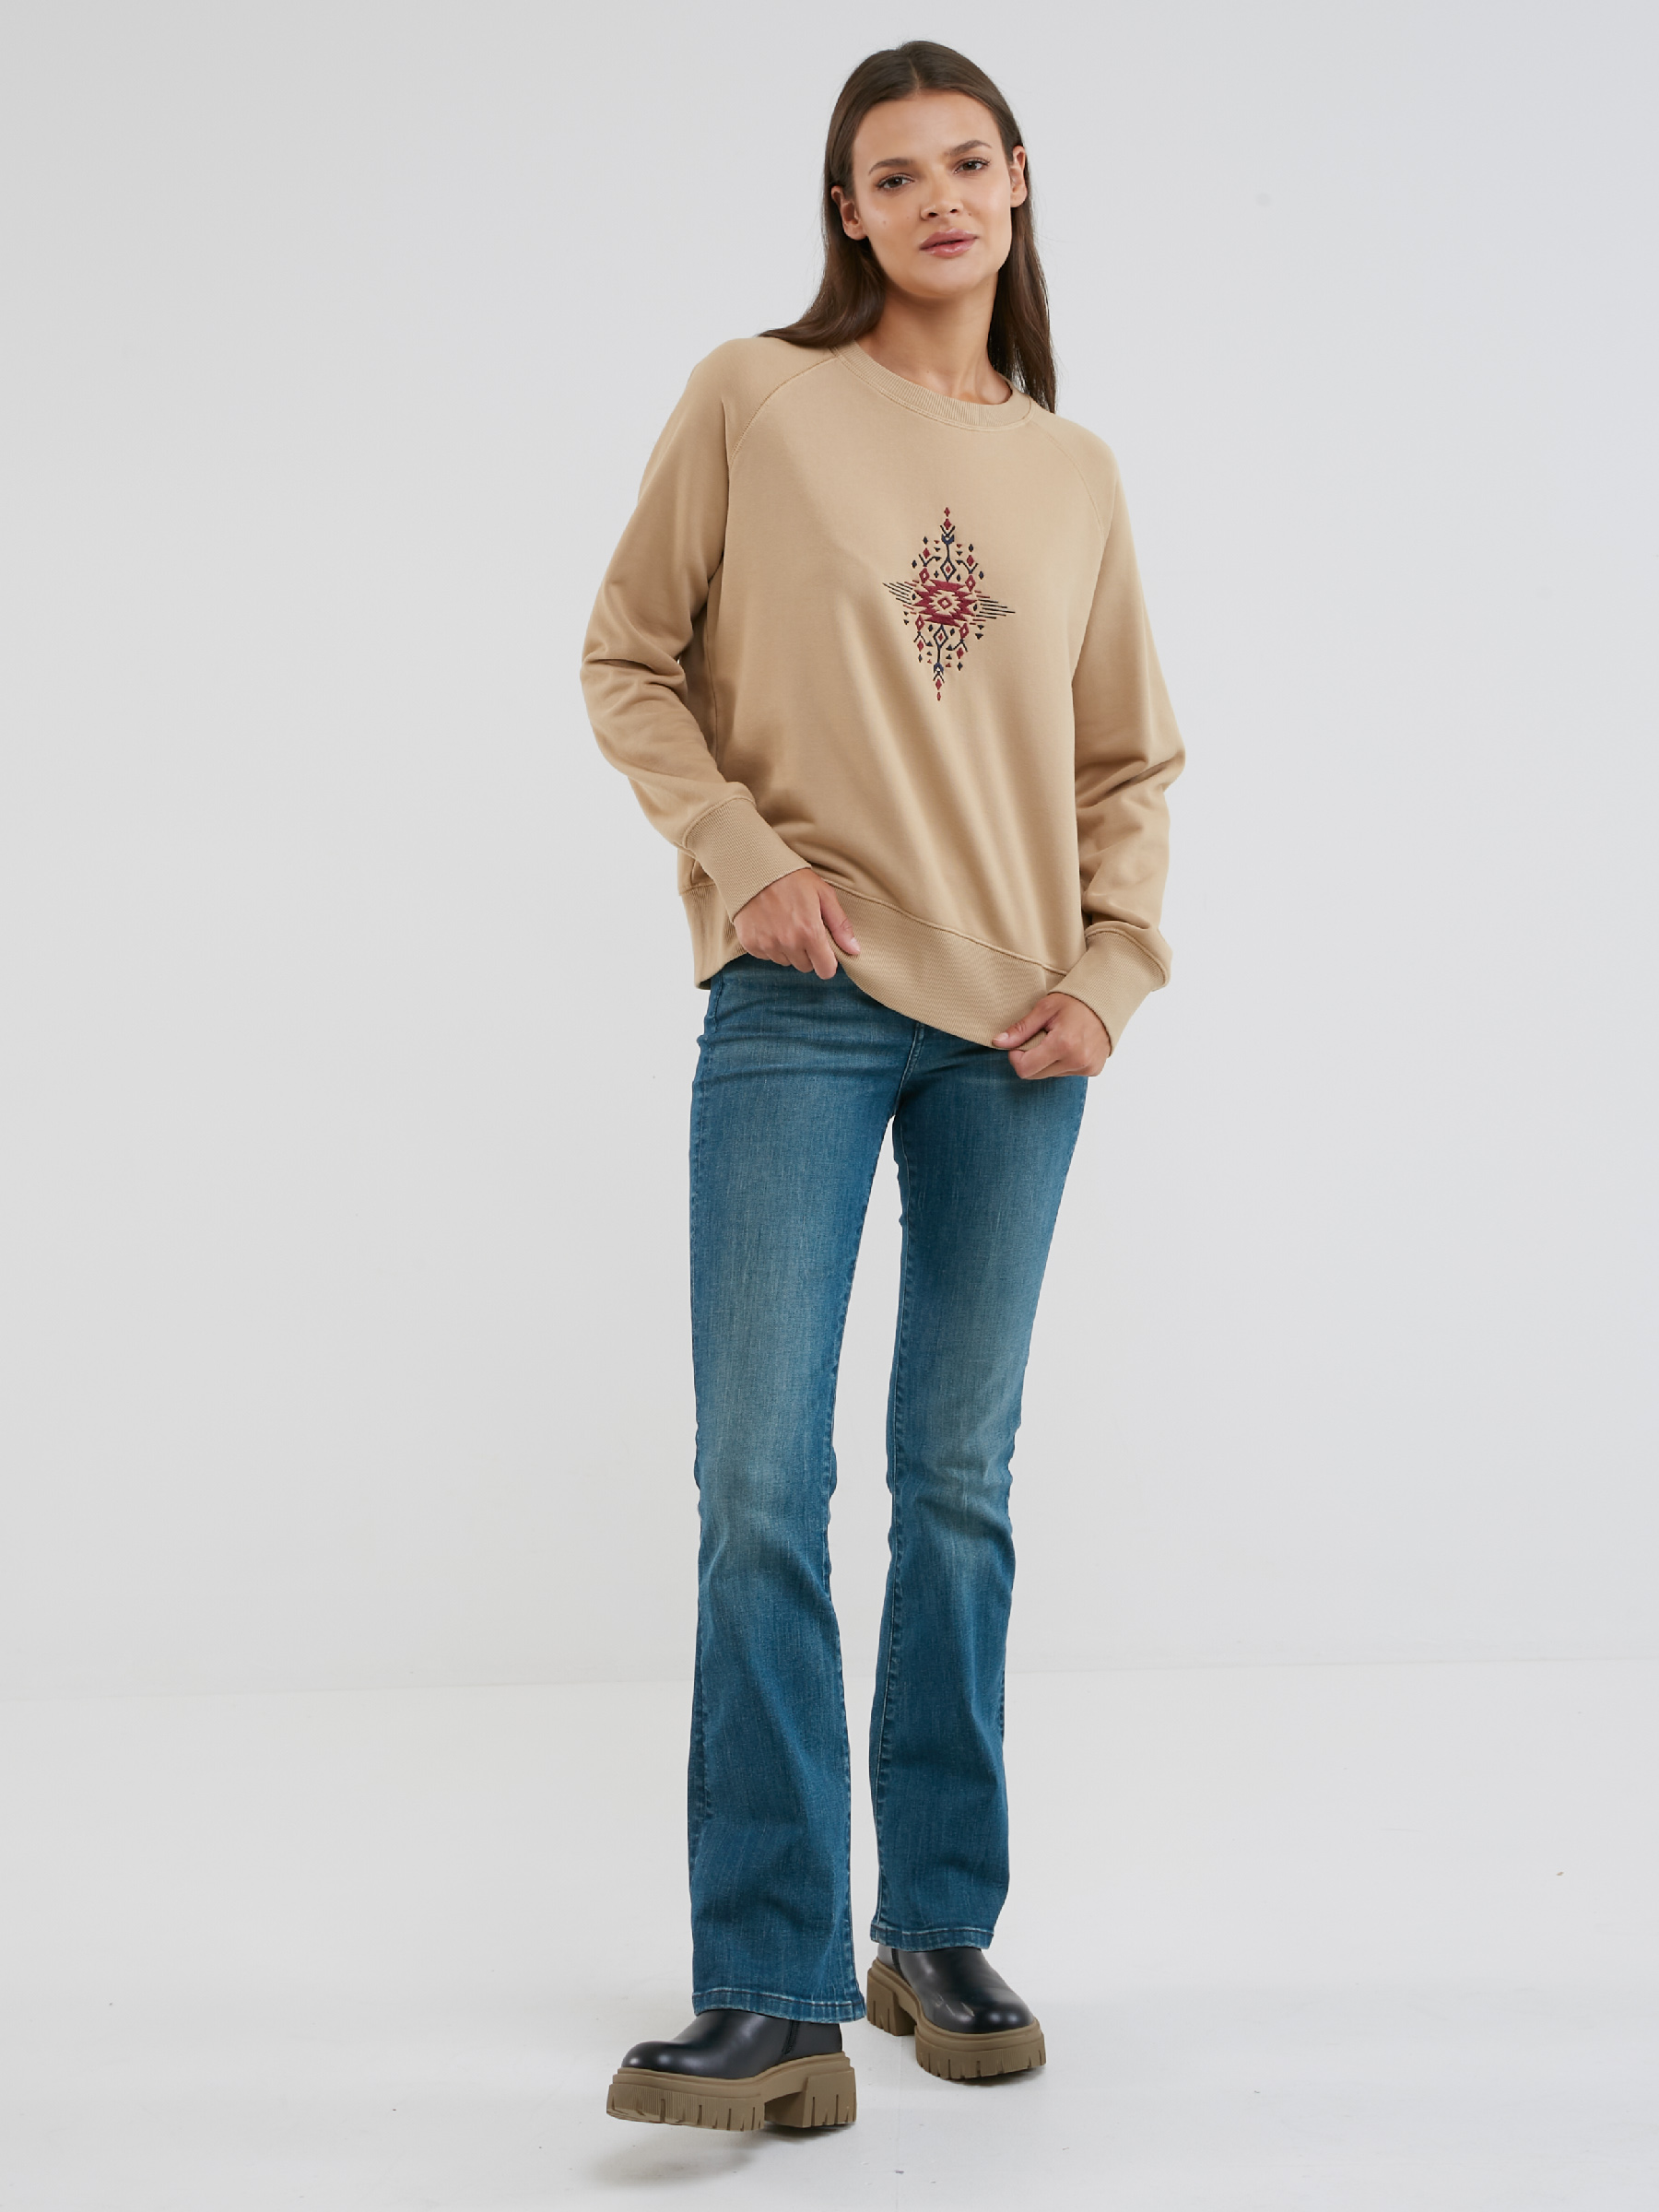 Big Star Woman's Sweatshirt 171700